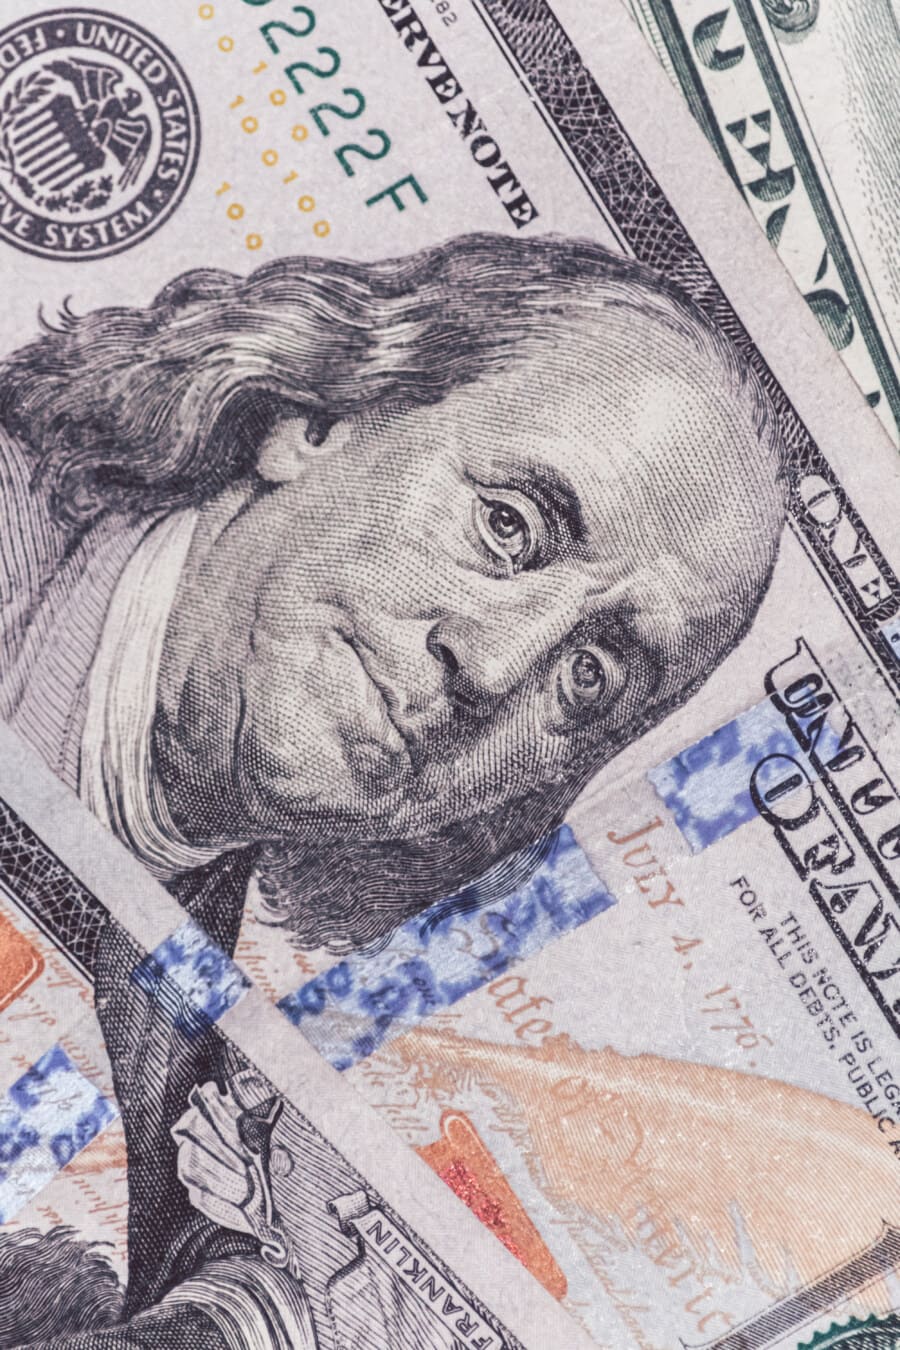 100$ Benjamin Franklin, US dollar, United States of America, inflation, cash, money, currency, finance